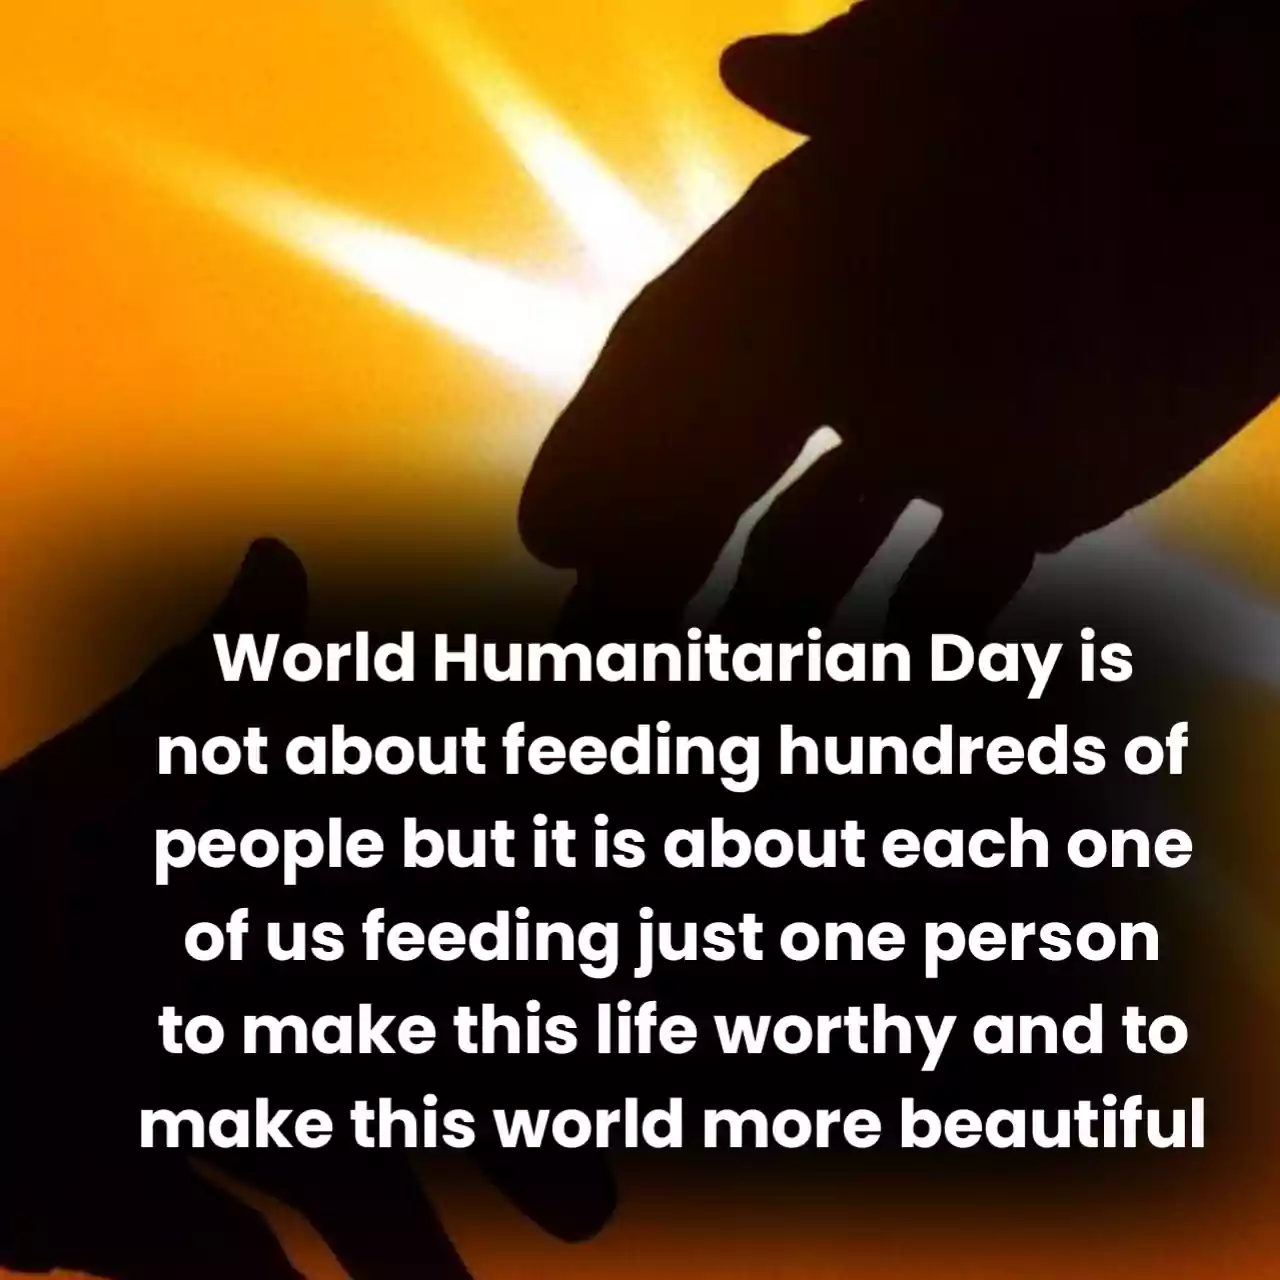 World Humanity Day